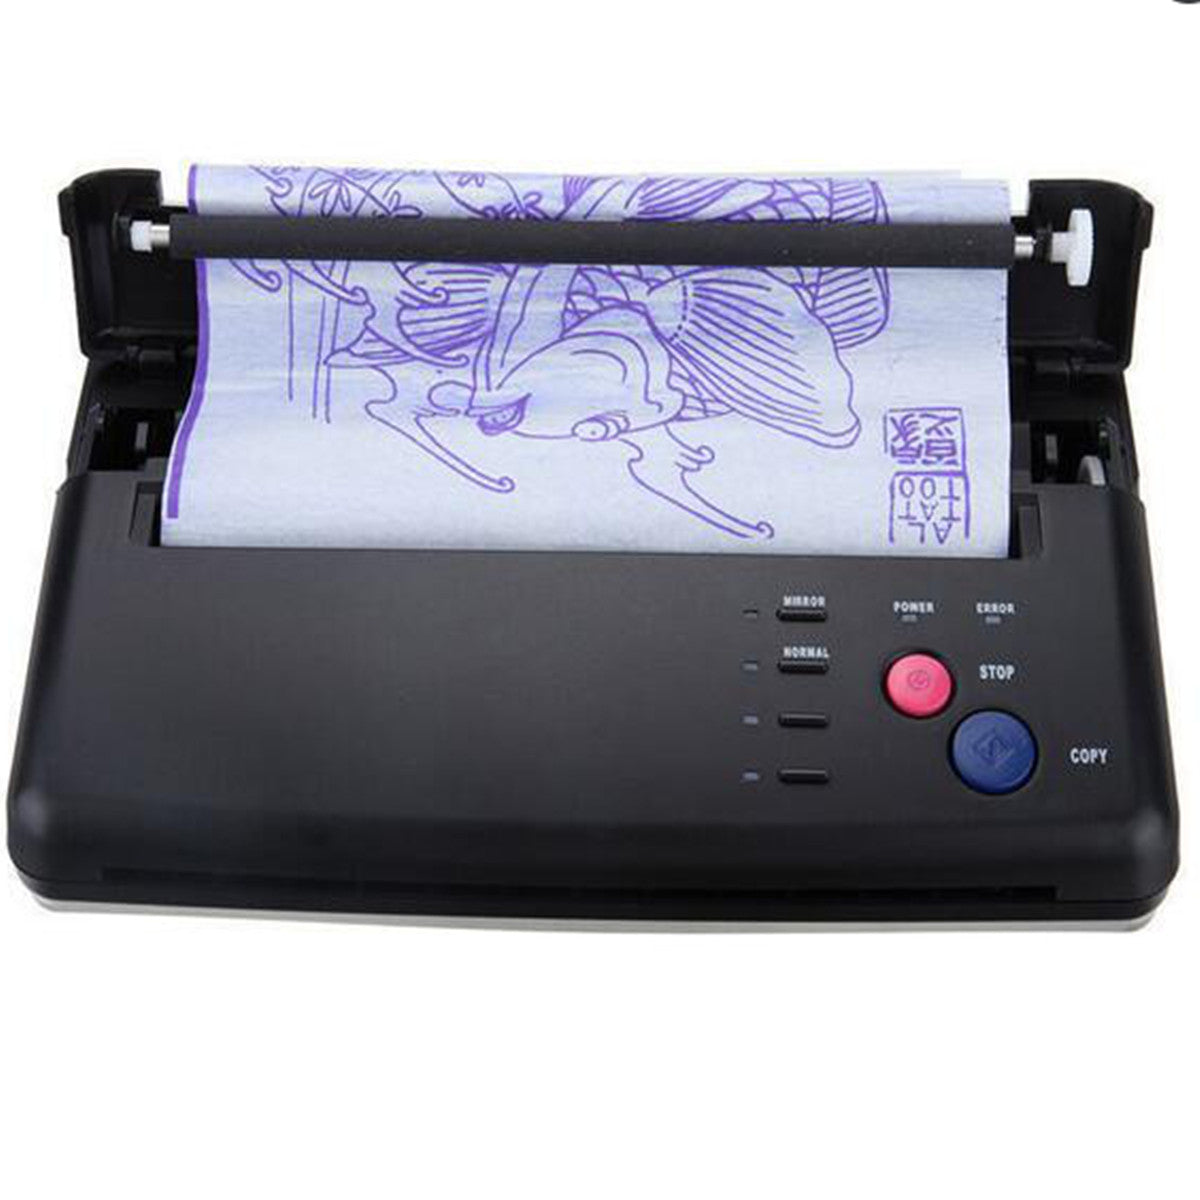 100-240V Tattoo Thermal Stencil Maker Copier Transfer Printer Flash TattooTransfer Copier Machine